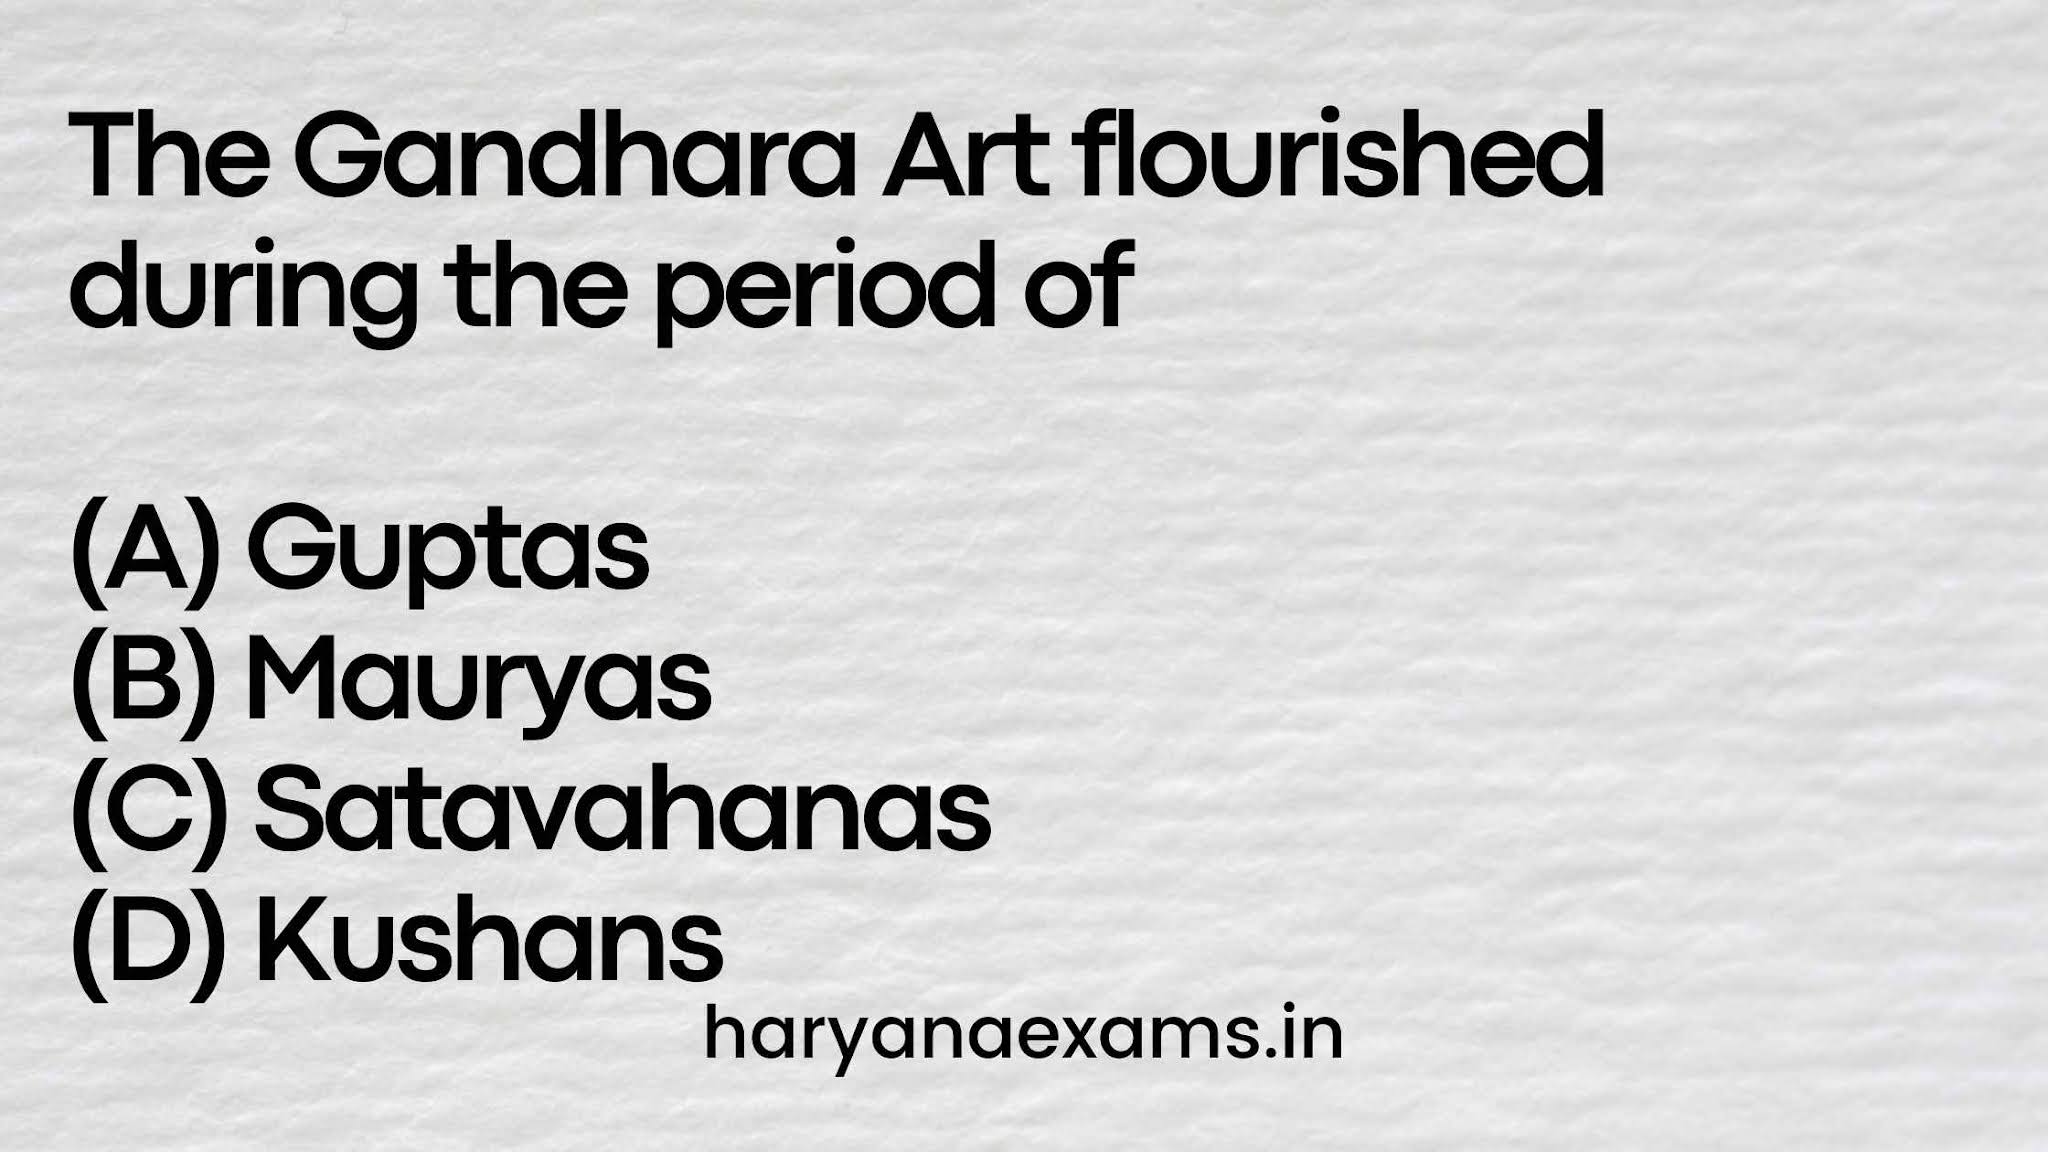 The Gandhara Art flourished during the period of (A) Guptas (B) Mauryas (C) Satavahanas (D) Kushans